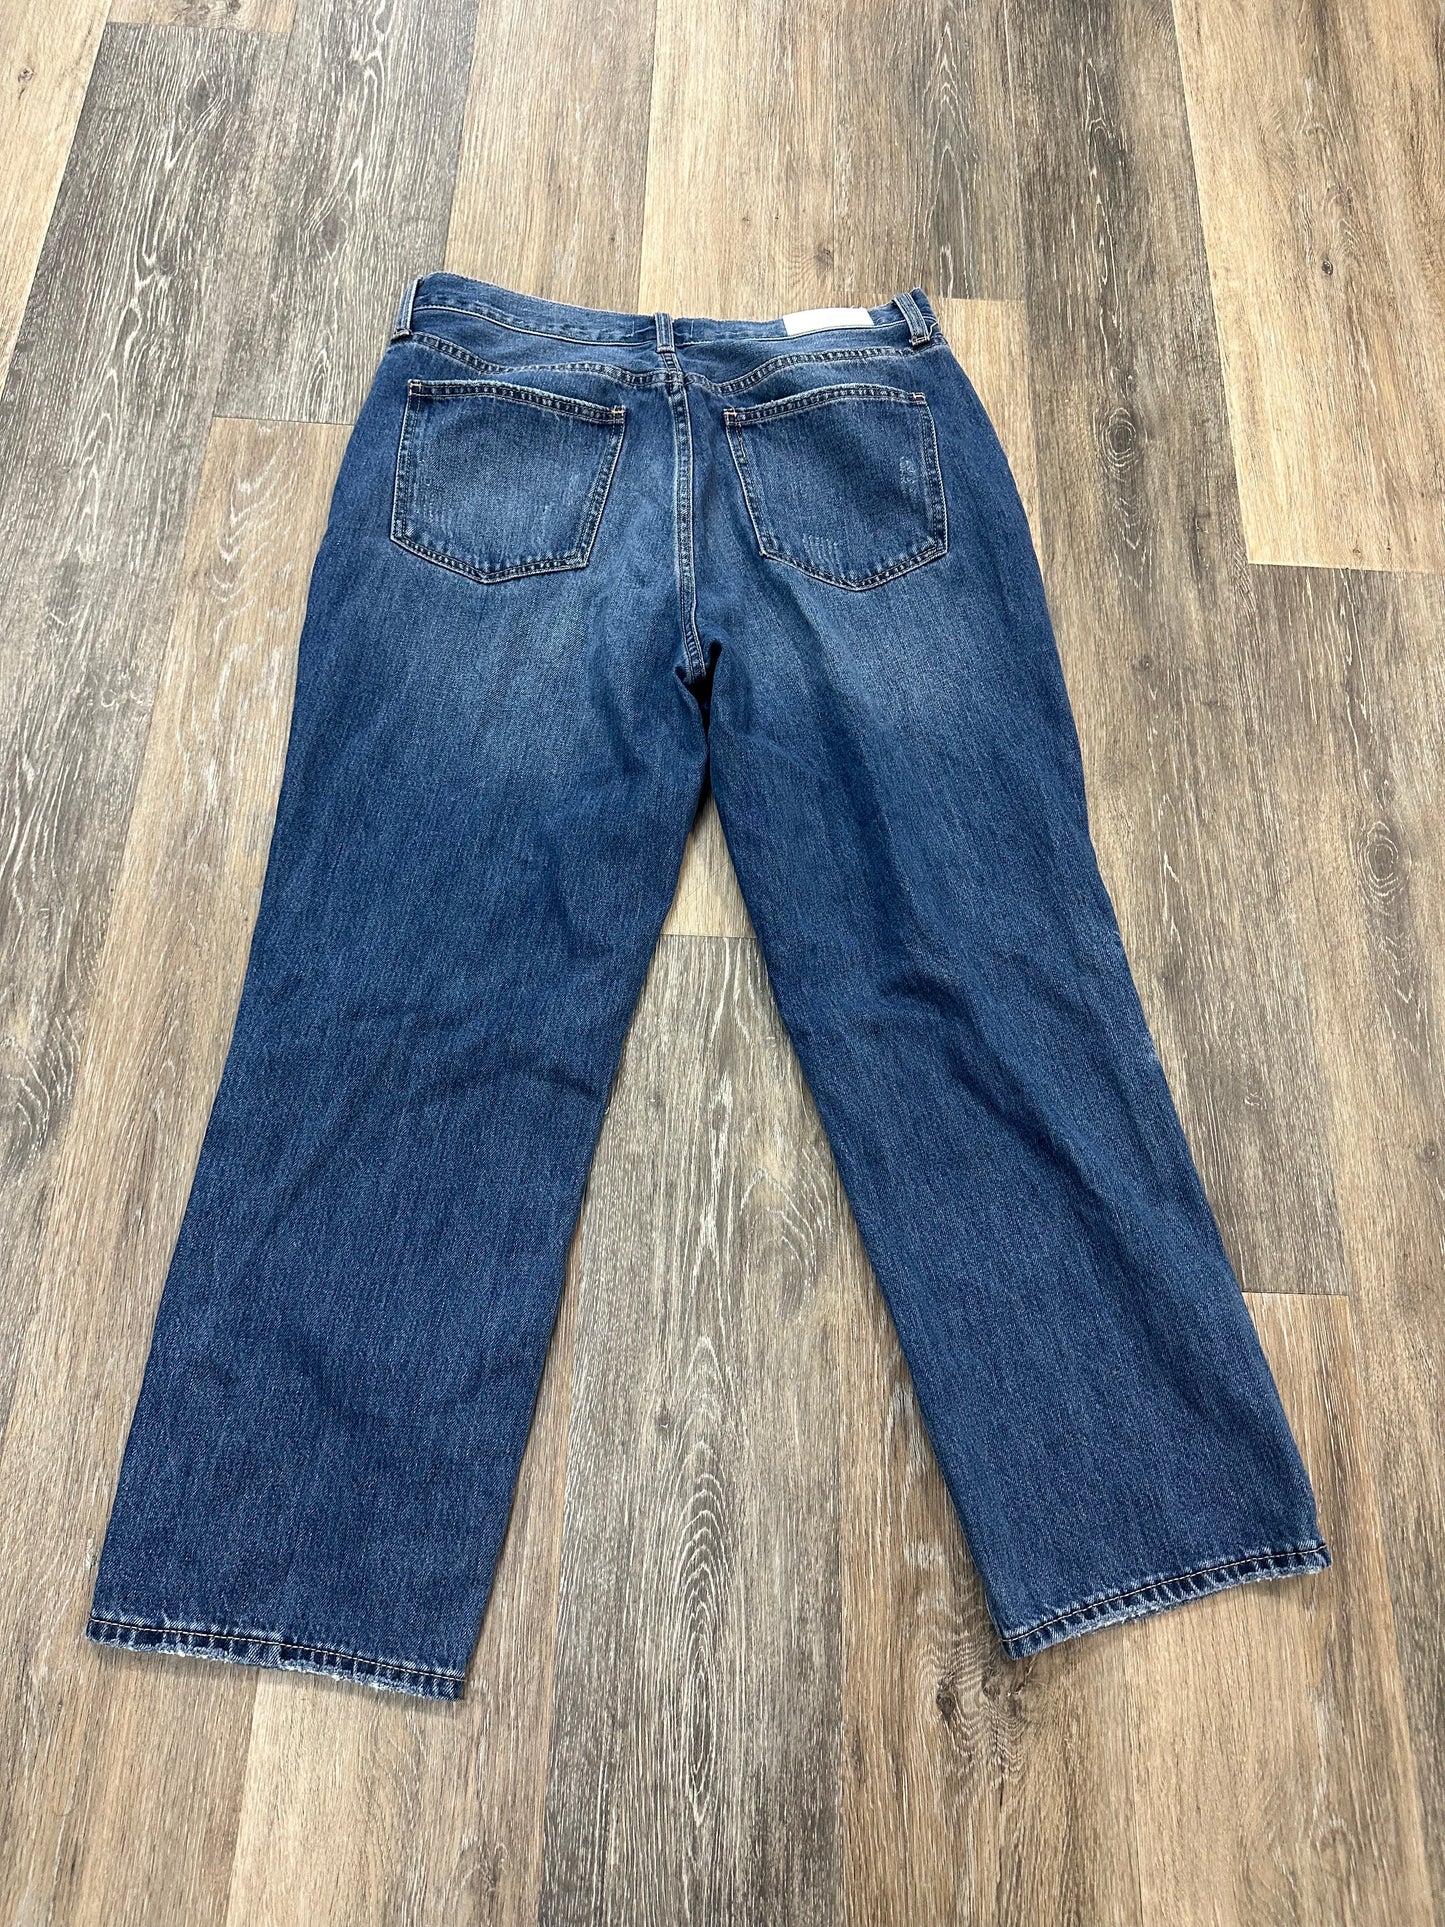 Blue Denim Jeans Designer Pistola, Size 12